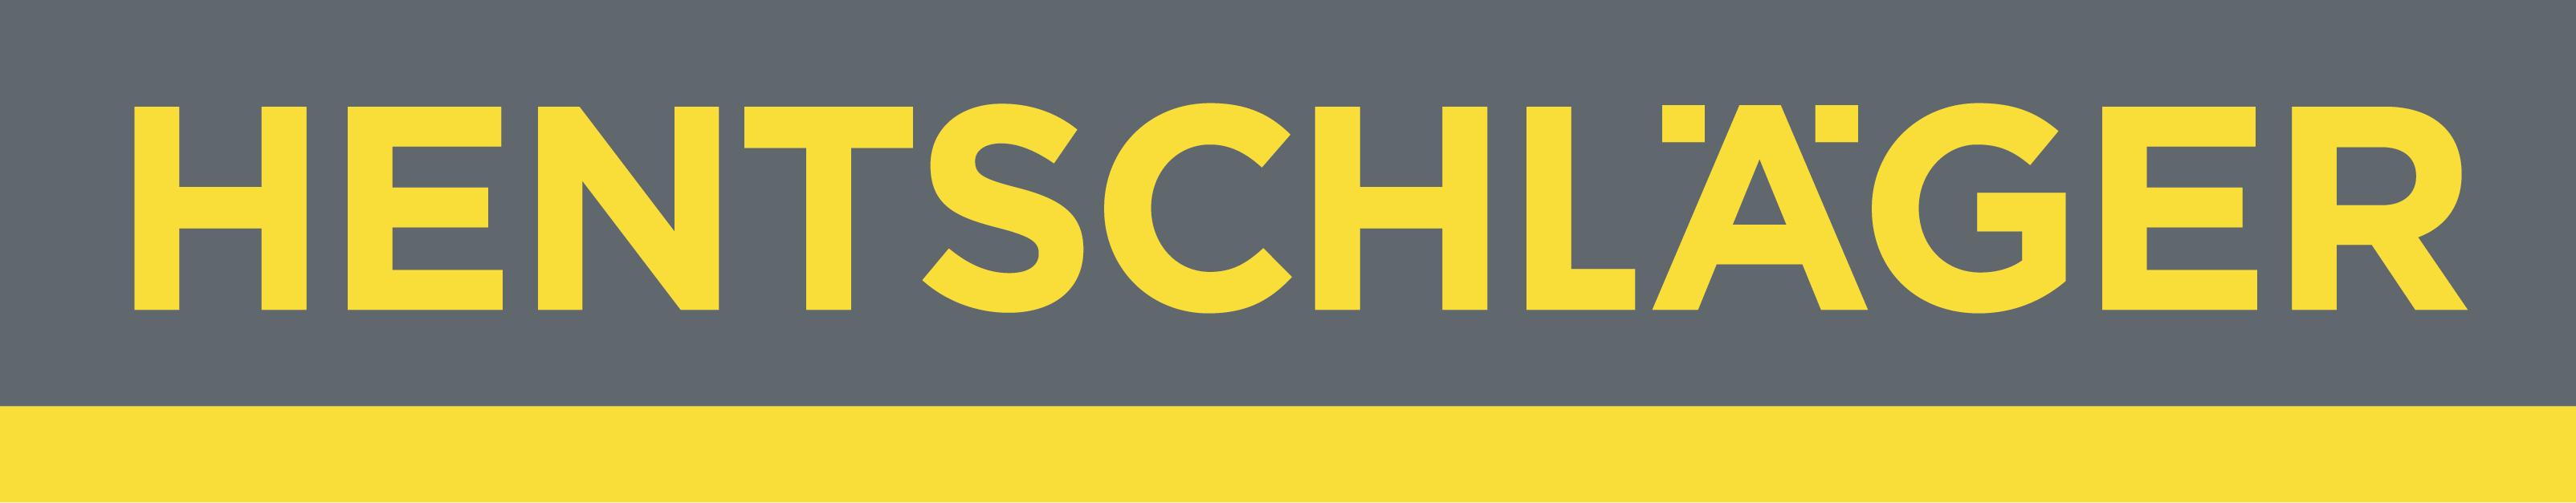 Hentschlaeger Logo